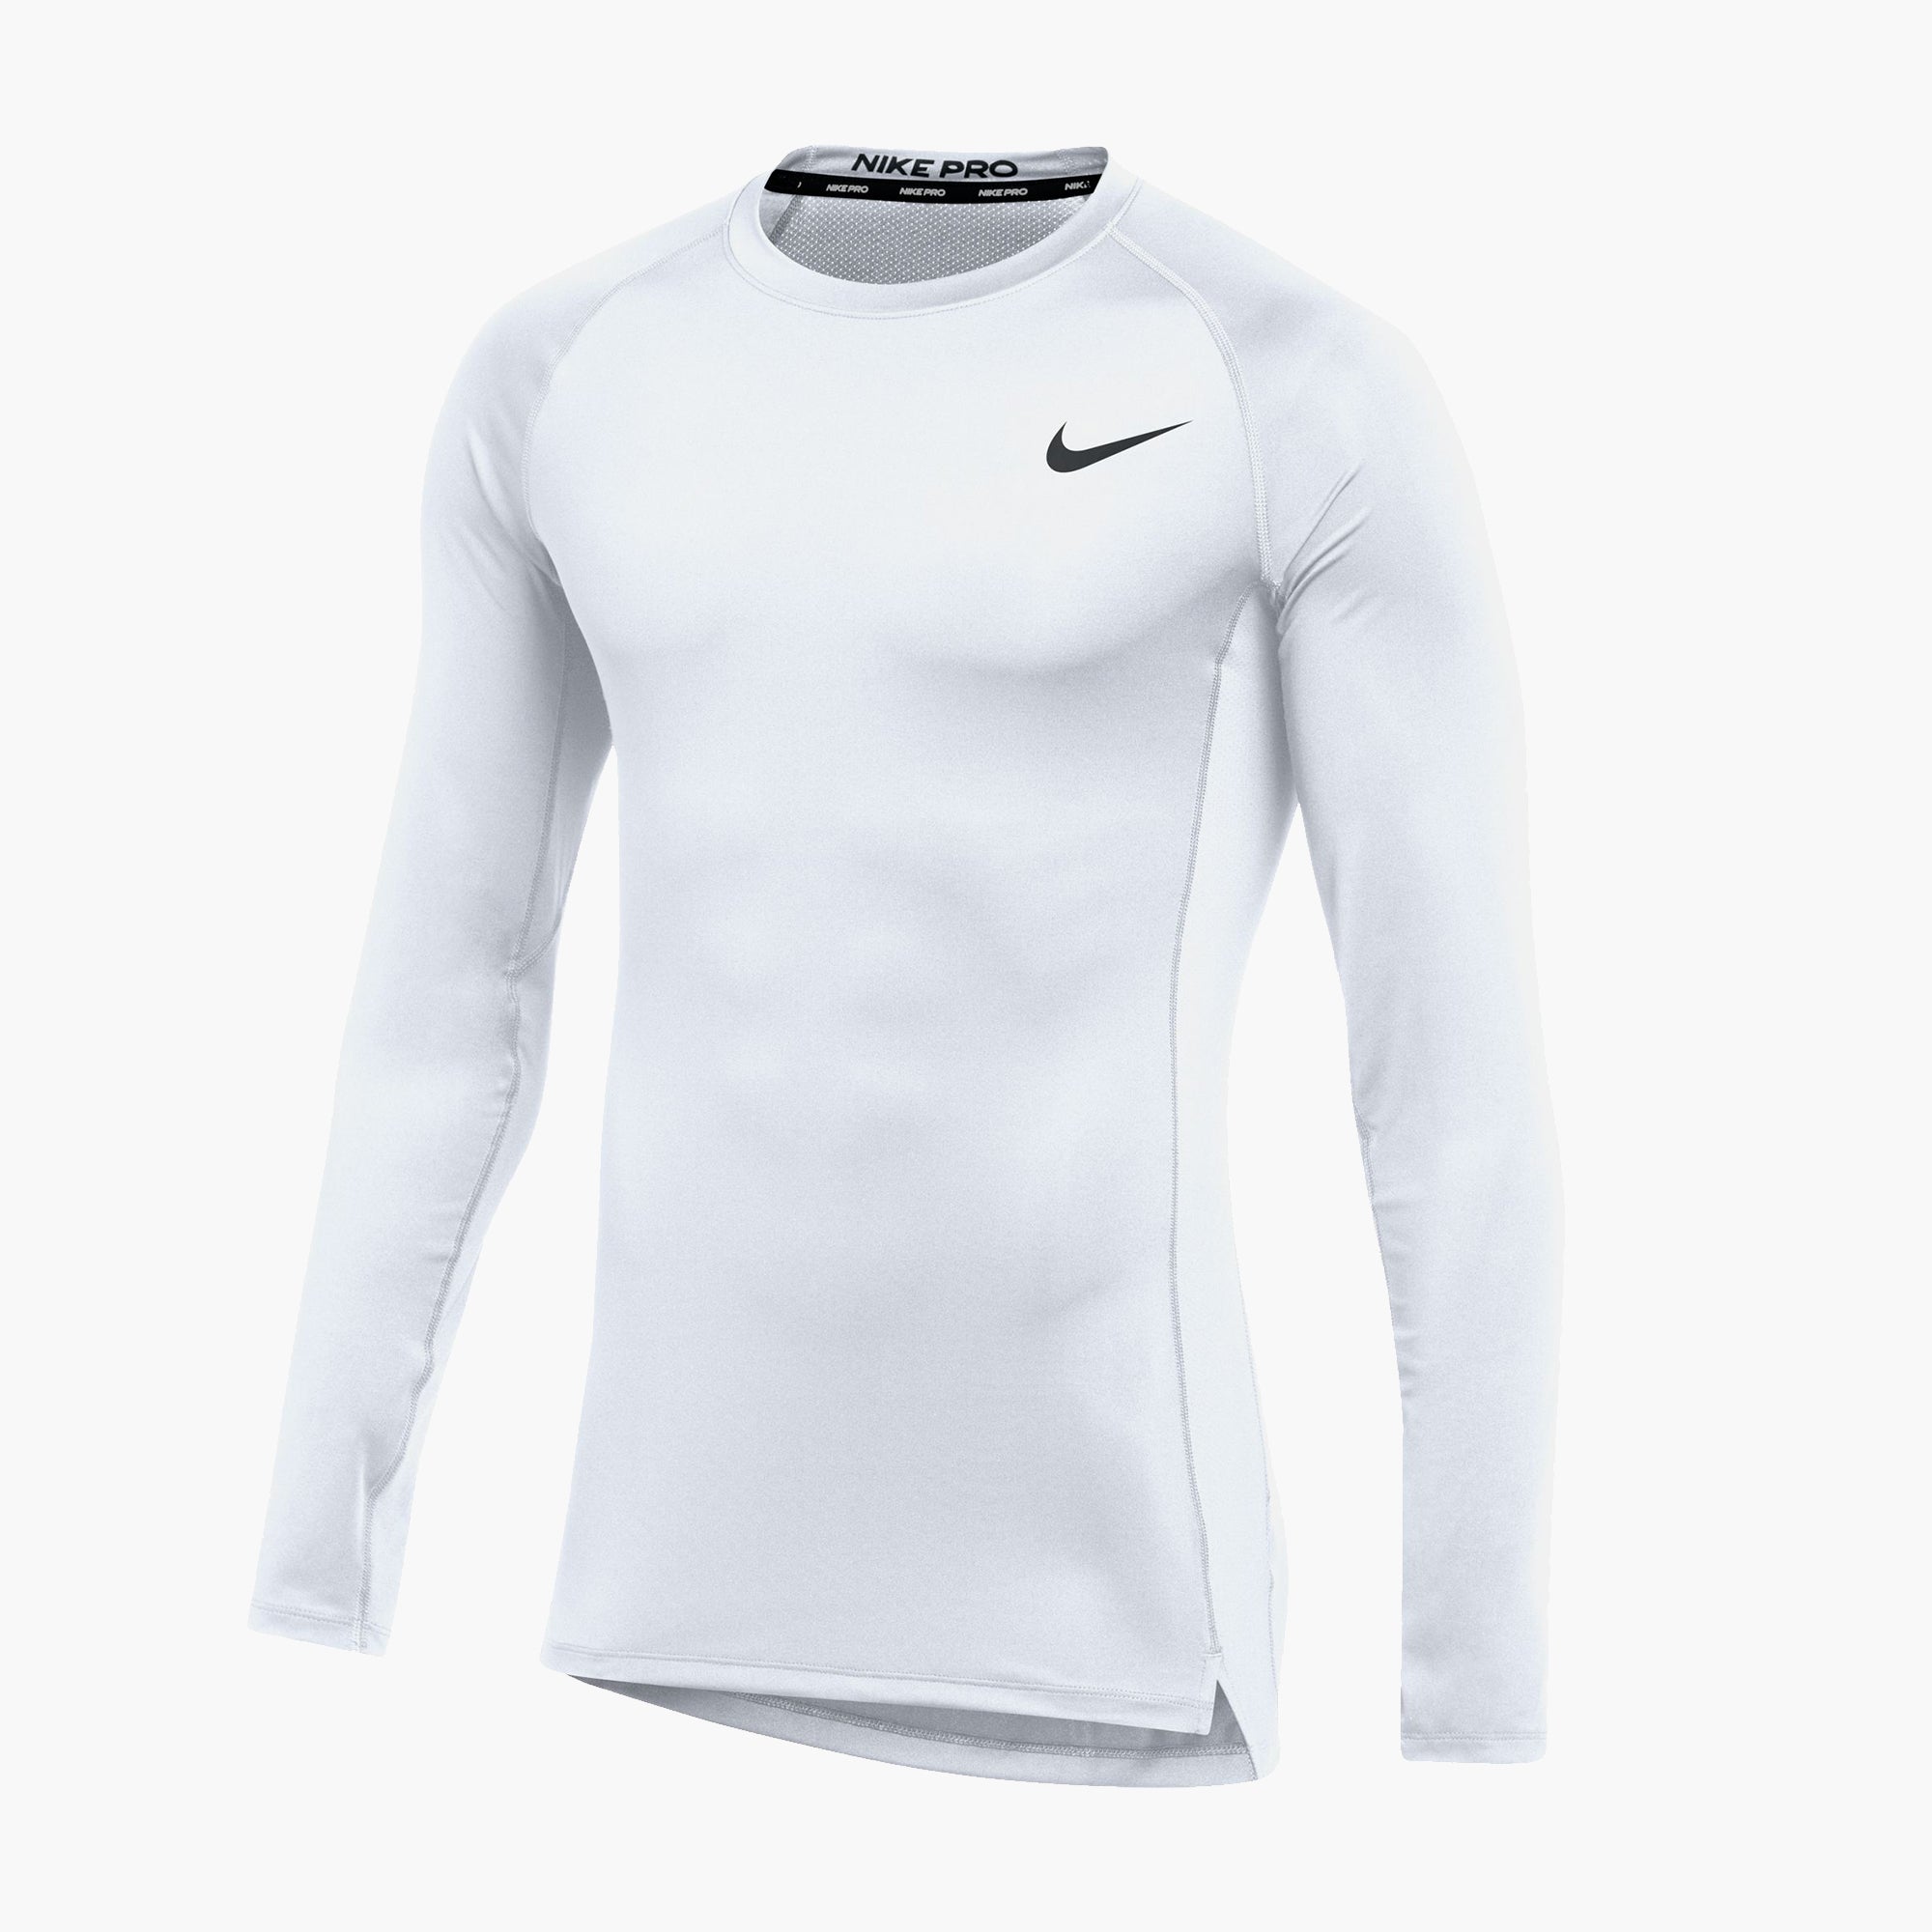 Nike Pro Tight Long Sleeve Base Layer Compression Shirt Men's